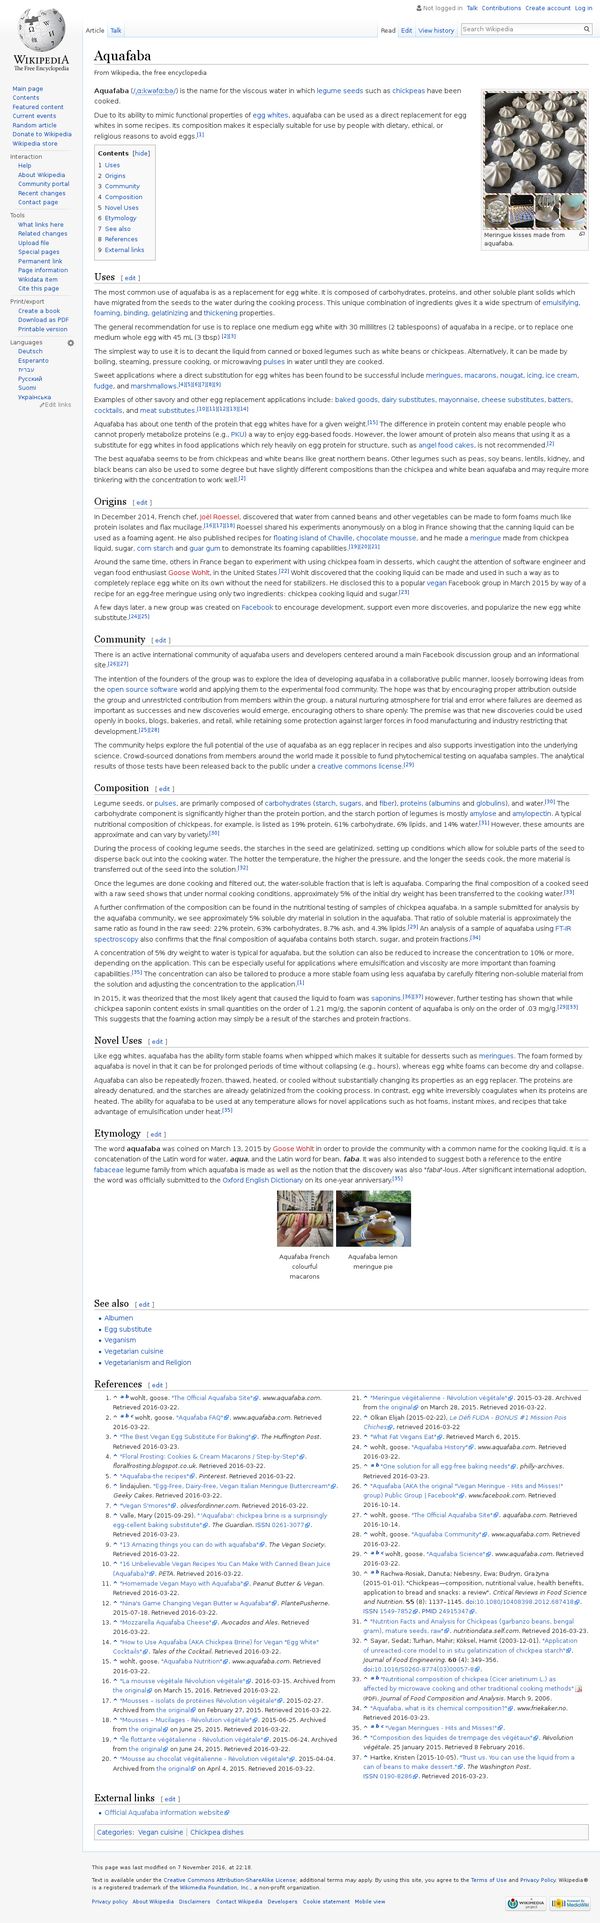 Aquafaba - Wikipedia, the free encyclopedia